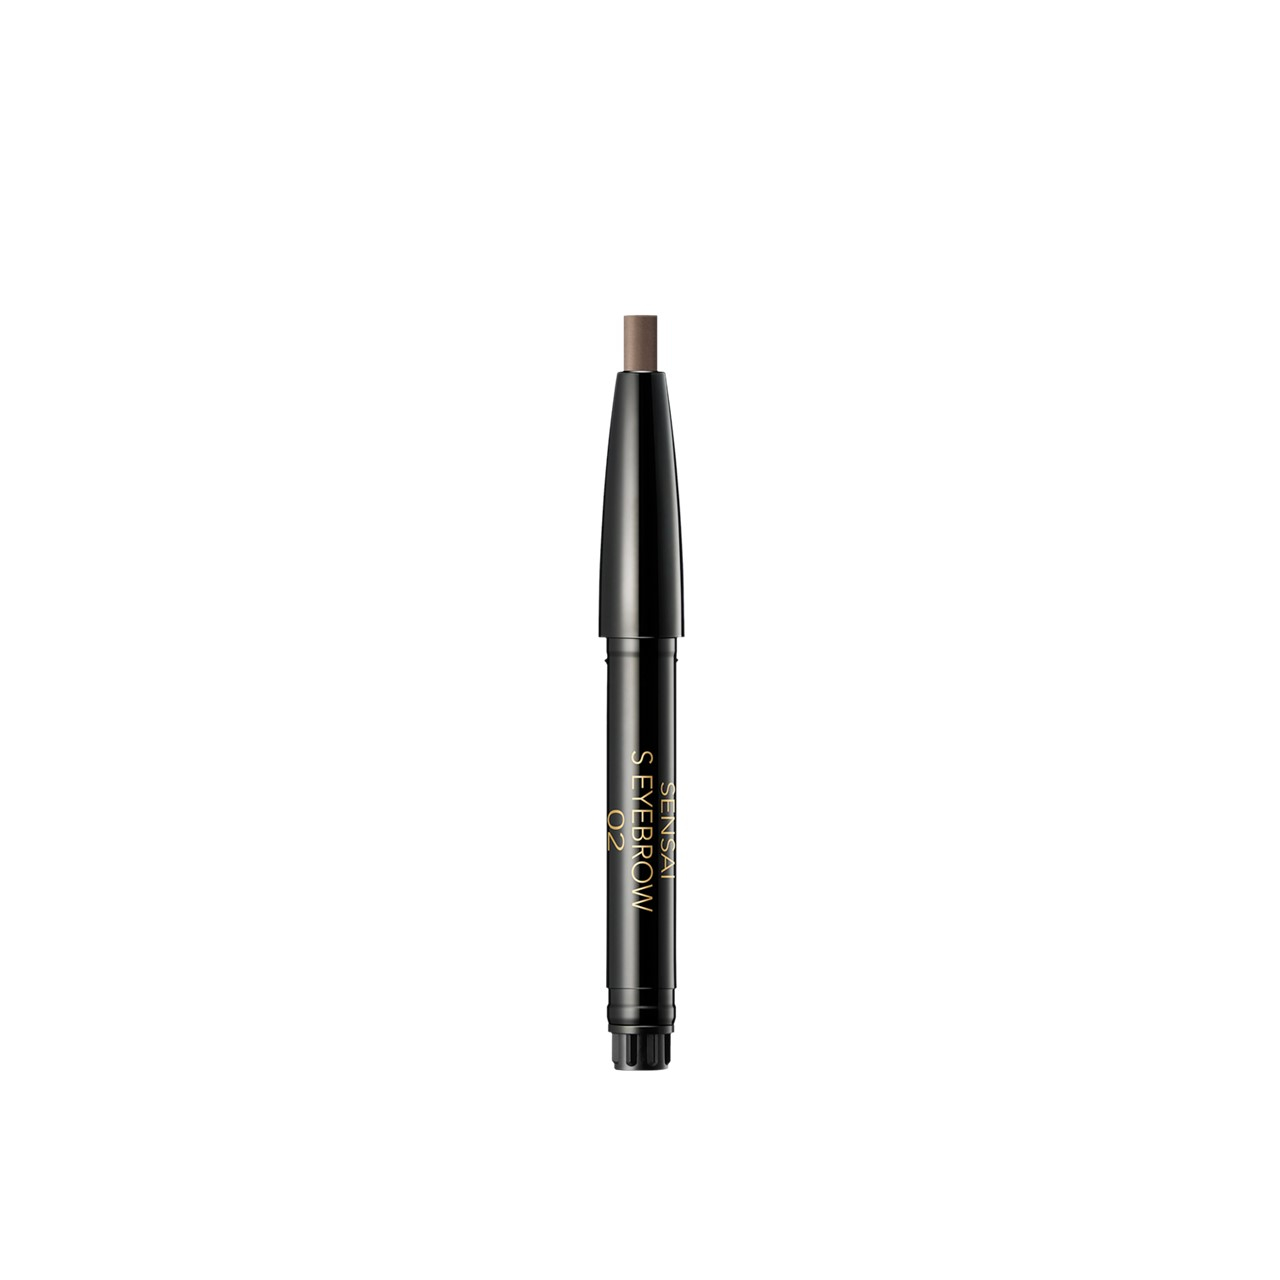 SENSAI Styling Eyebrow Pencil Refill 02 Warm Brown 0.2g